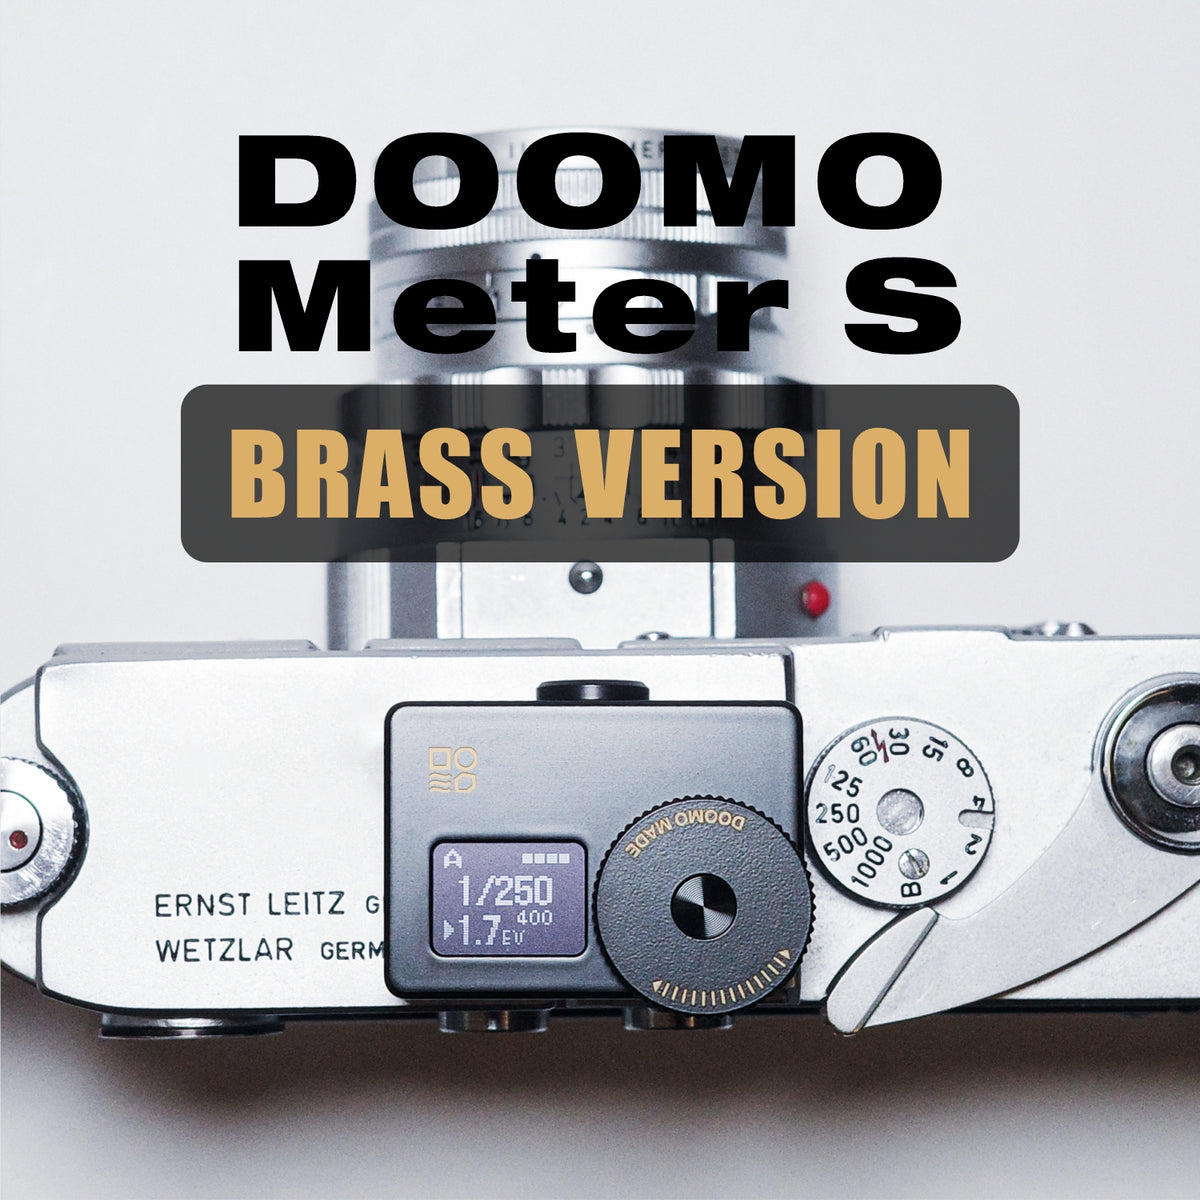 【NEW】DOOMO Meter S BRASS Version, Long Battery Life, Customizable Serv